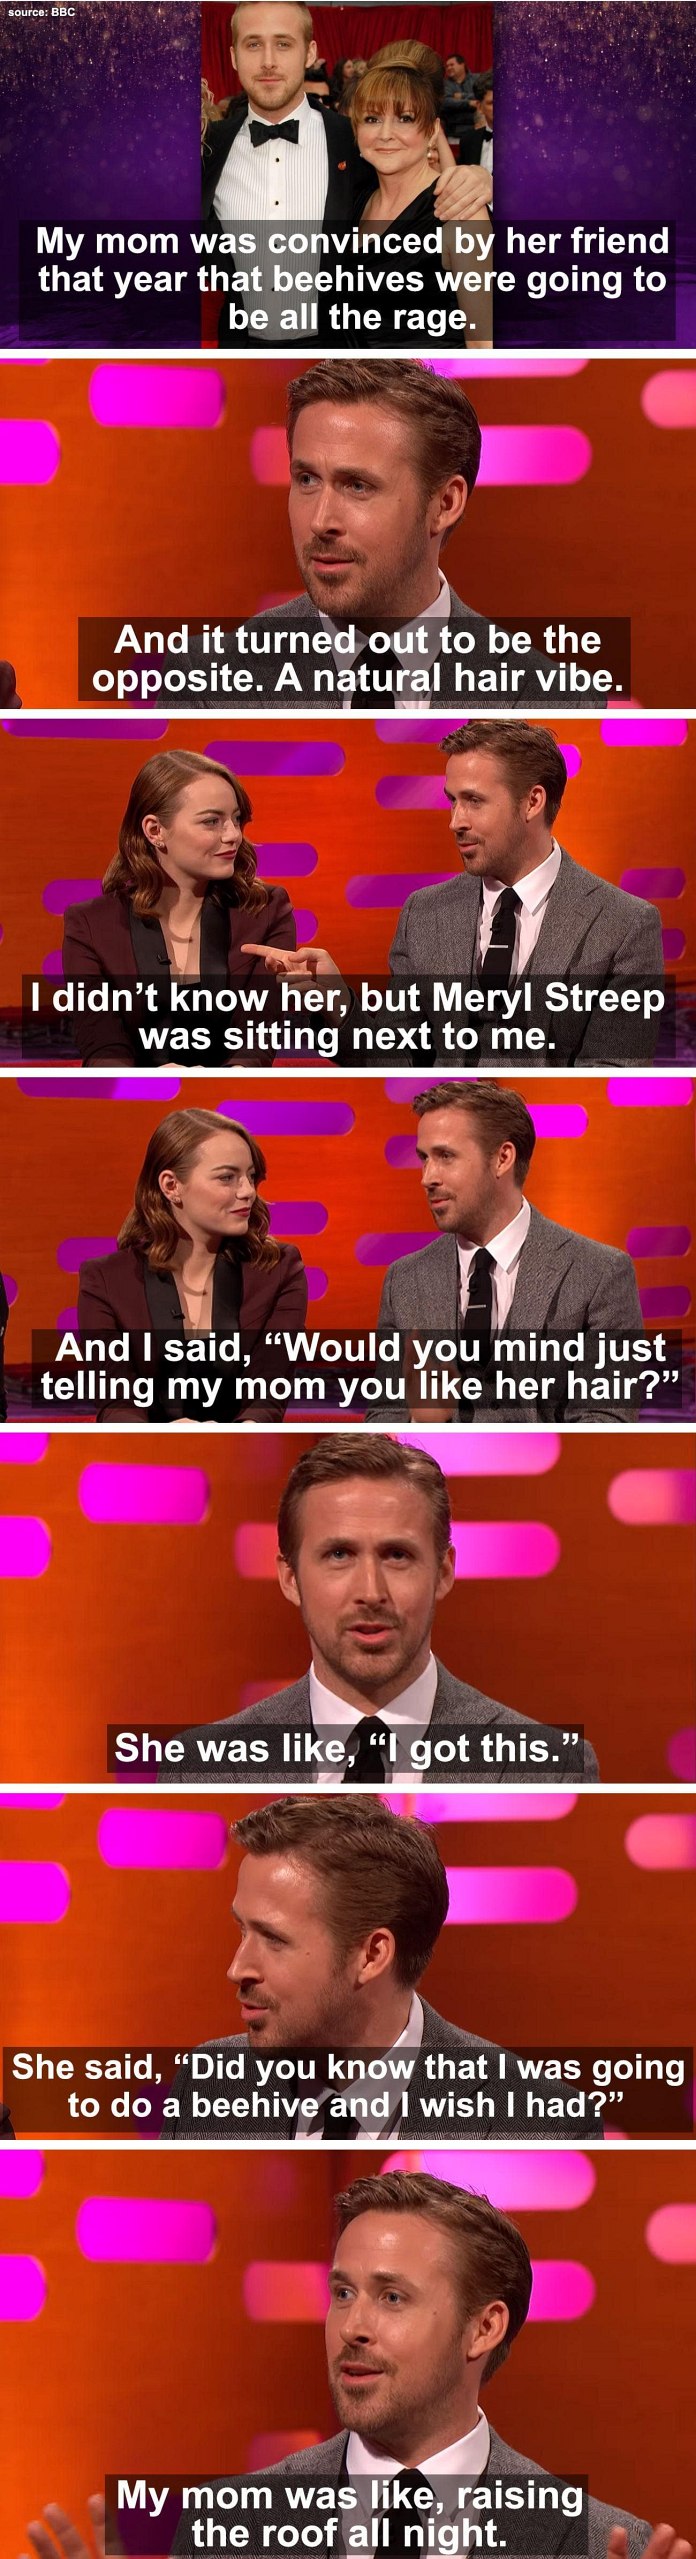 Meryl Streep Absolutely Made Ryan Gosling's Night